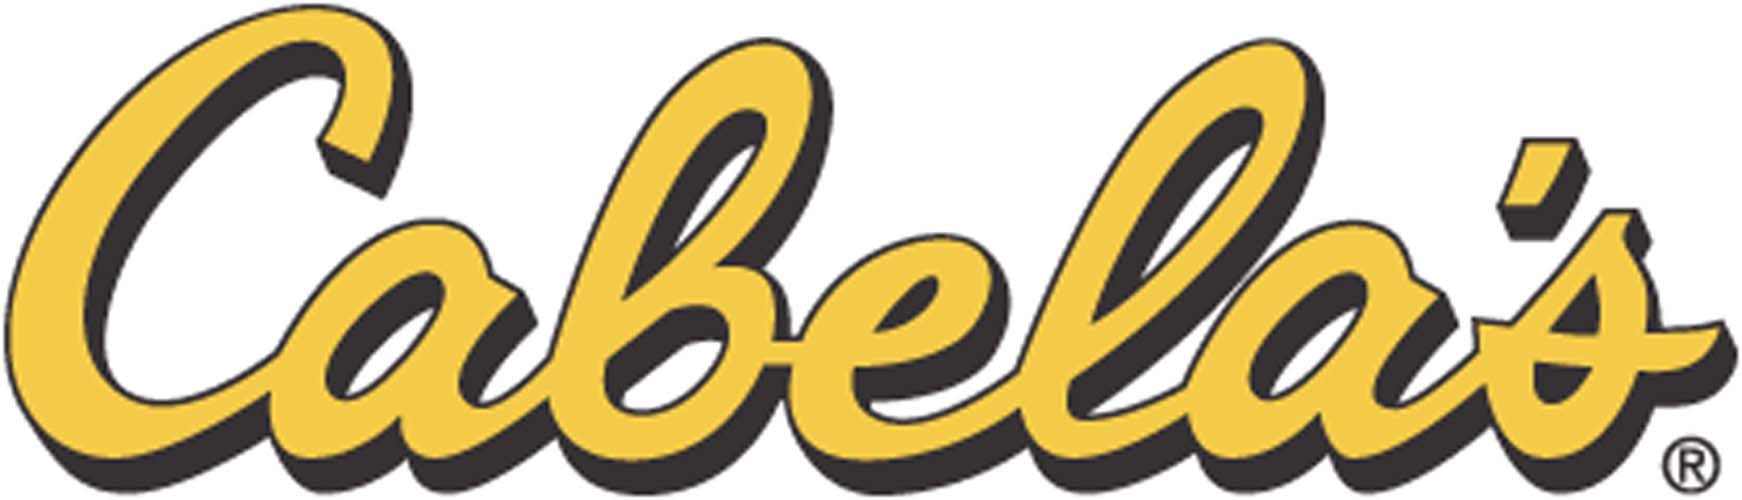 Cabela's Logo